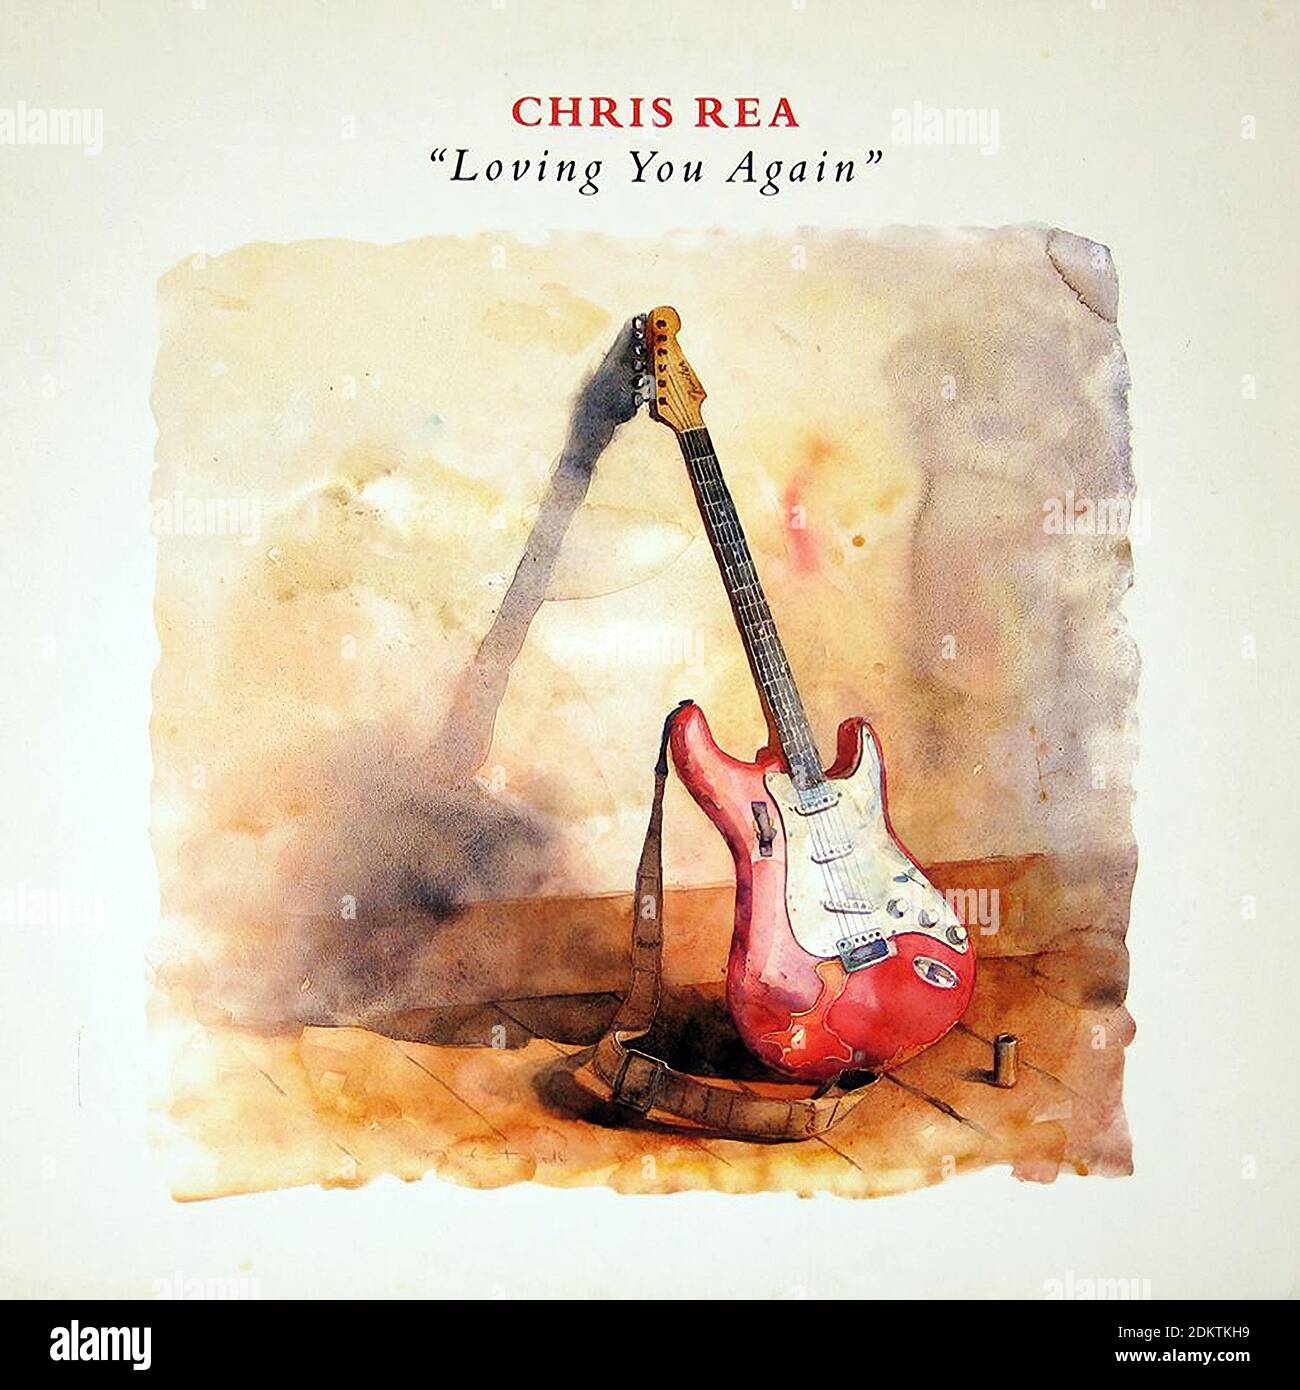 CHRIS REA LOVING YOU AGAIN 12 MAXI SINGLE - Vintage Vinyl Record Cover  Stock Photo - Alamy